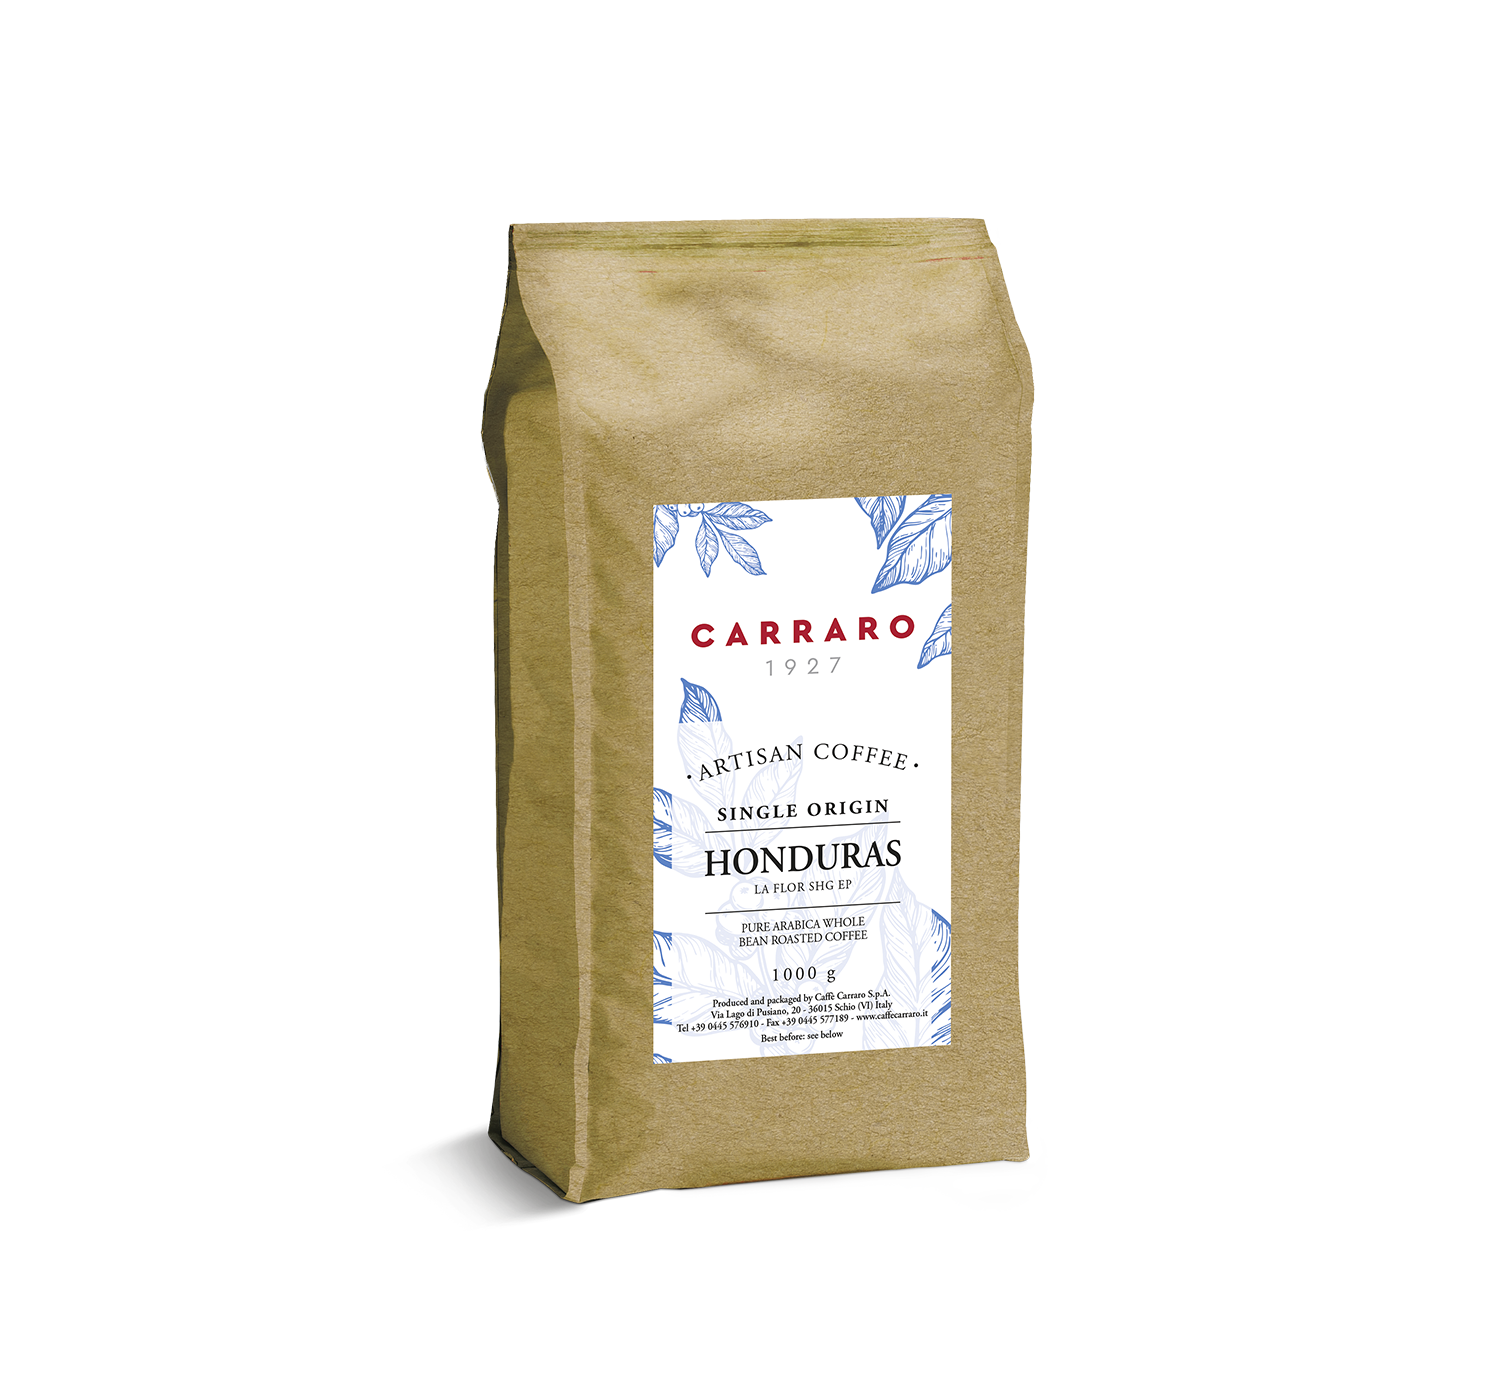 Ho.Re.Ca. - Honduras – coffee beans 1000 g - Shop online Caffè Carraro